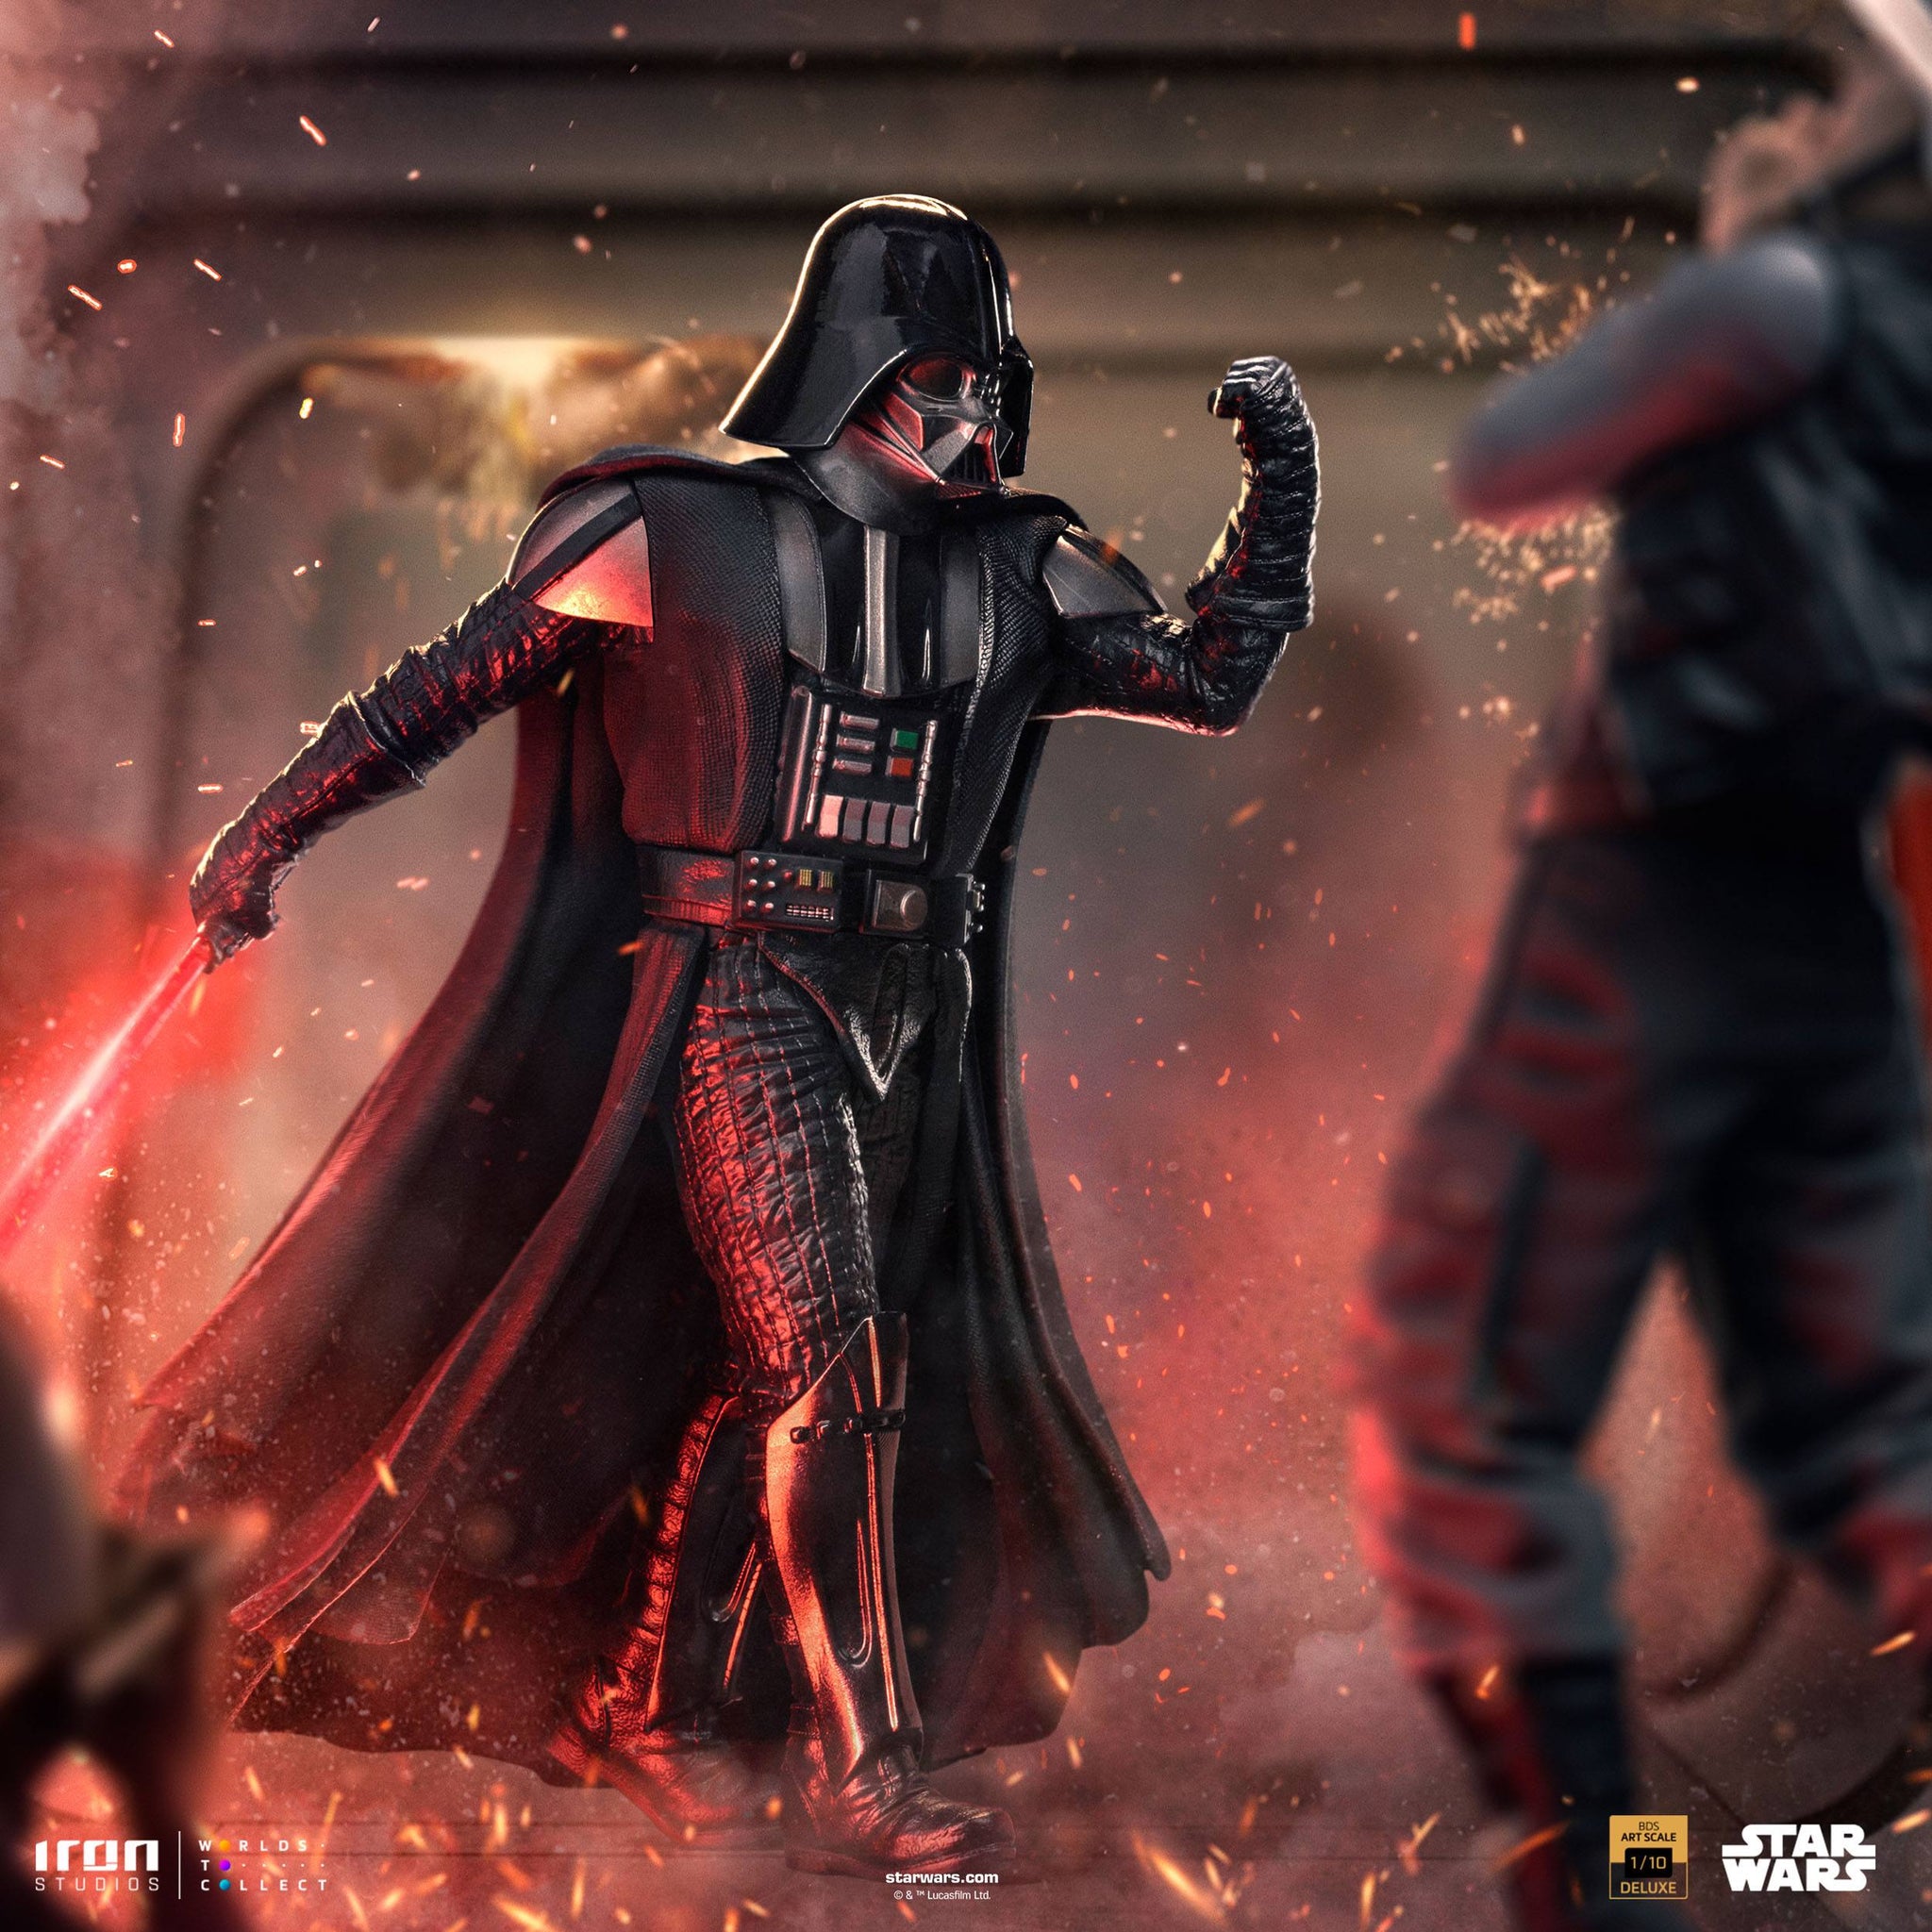 Steam WorkshopStar Wars Battlefront Darth Vader Rogue One Dark Hallway  Ultra Settings 1080p 60fps With Audio